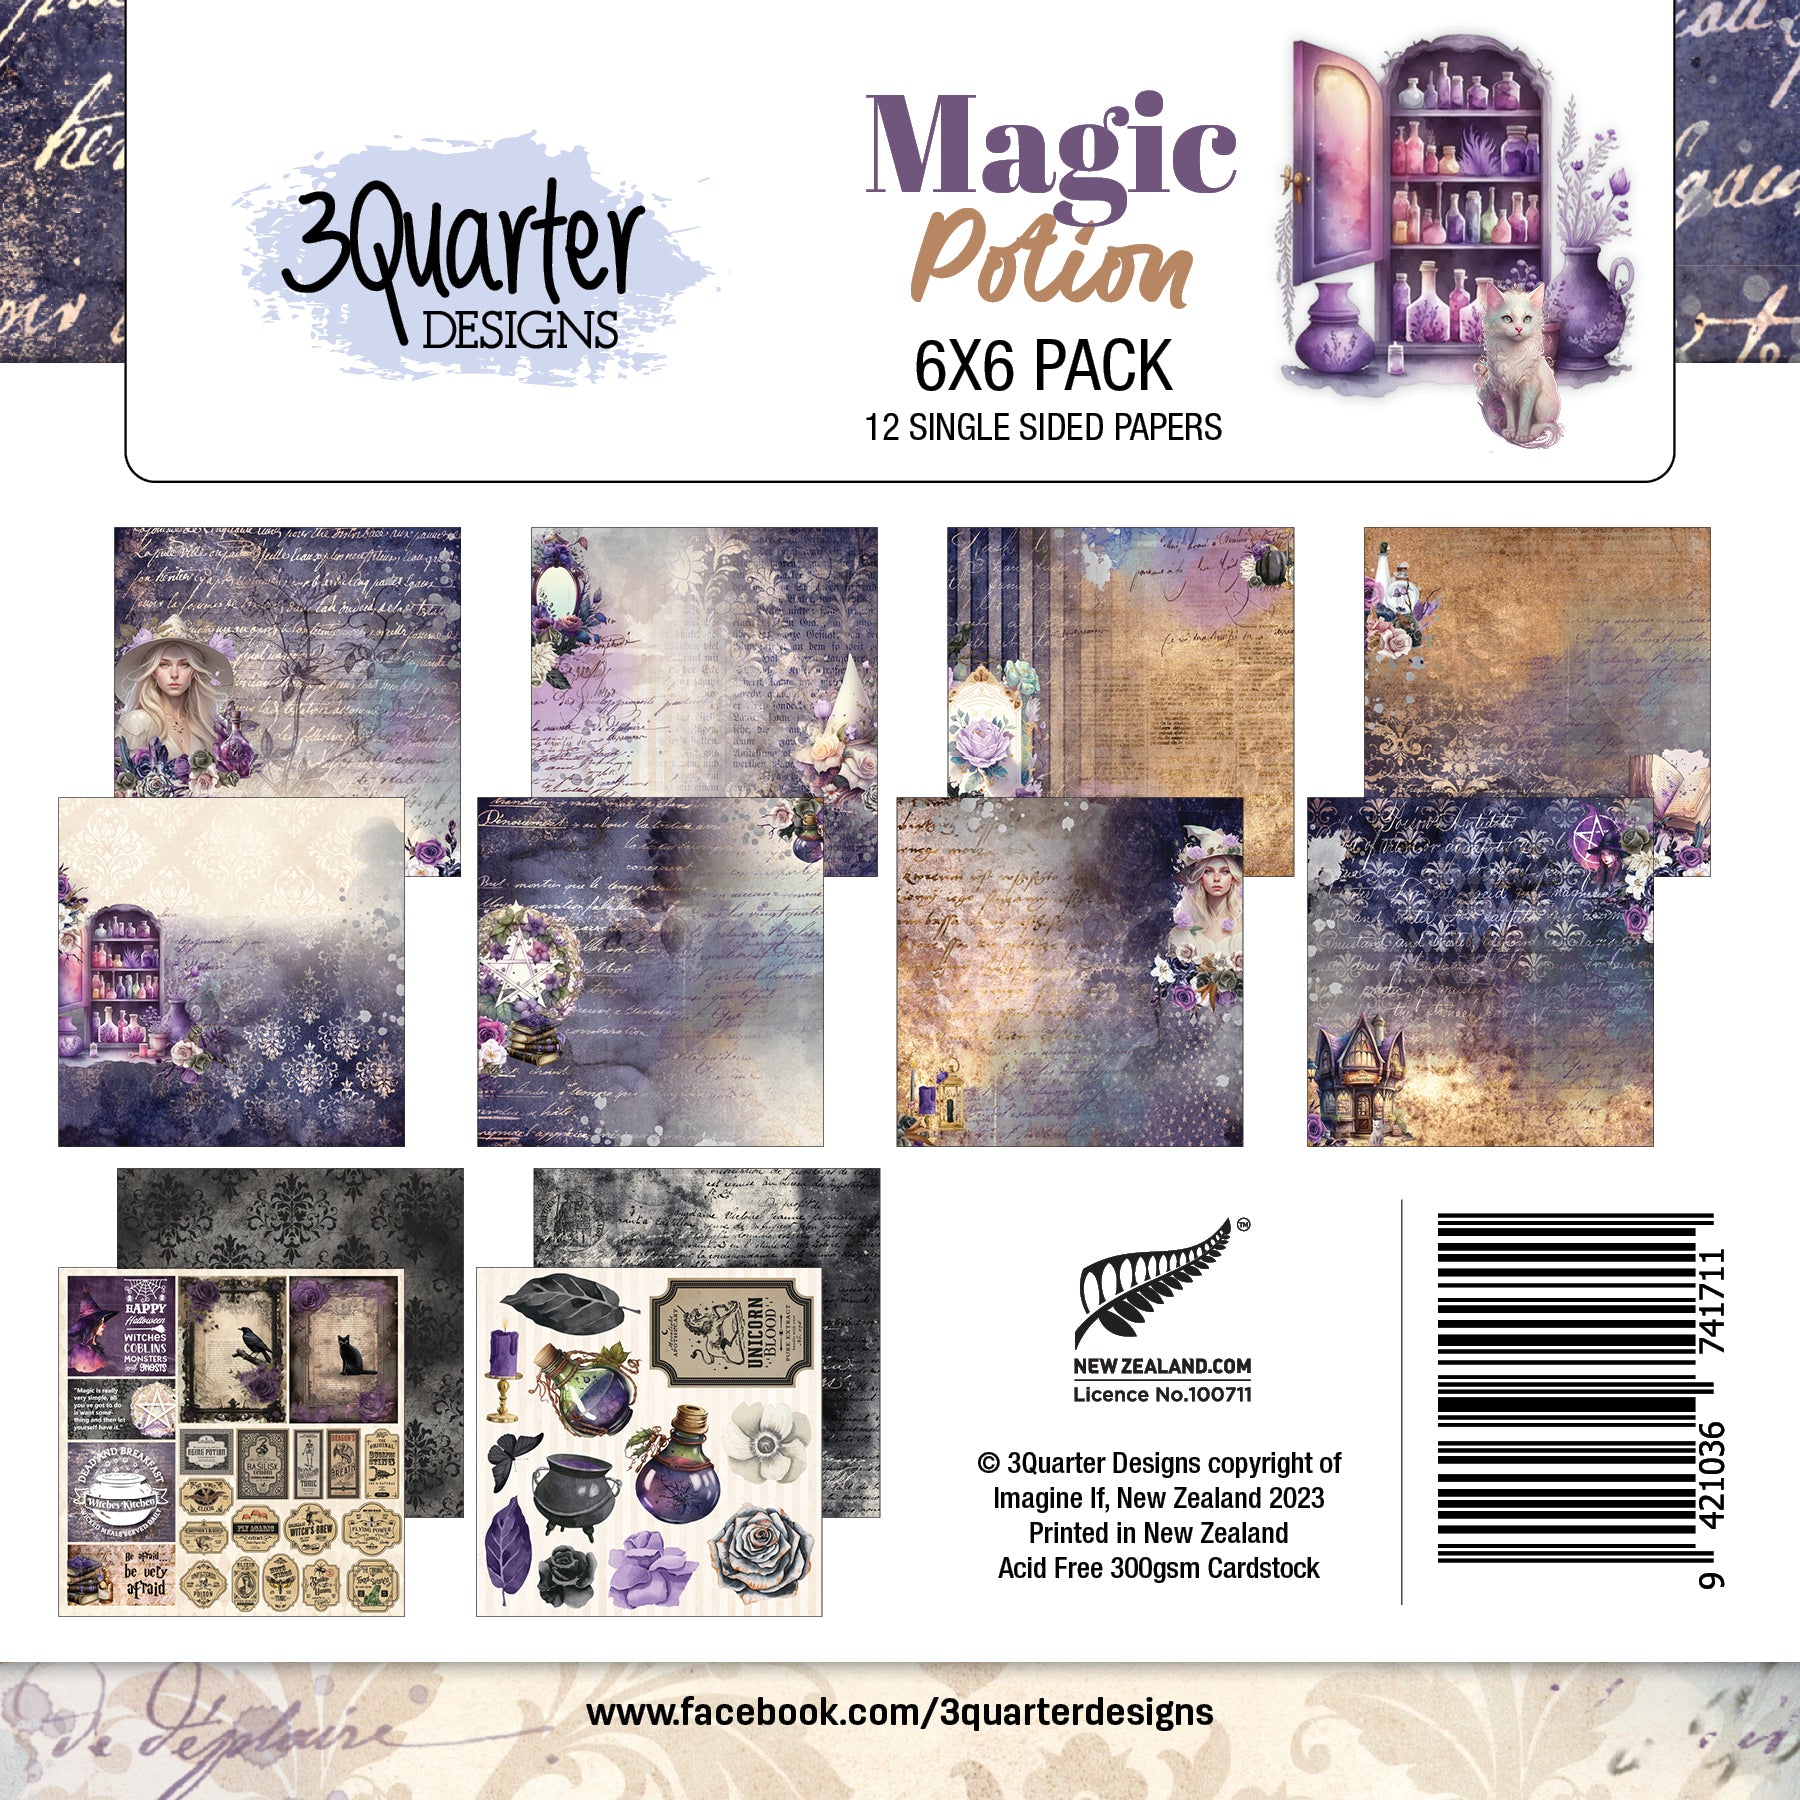 Magic Potion 6x6 Pack